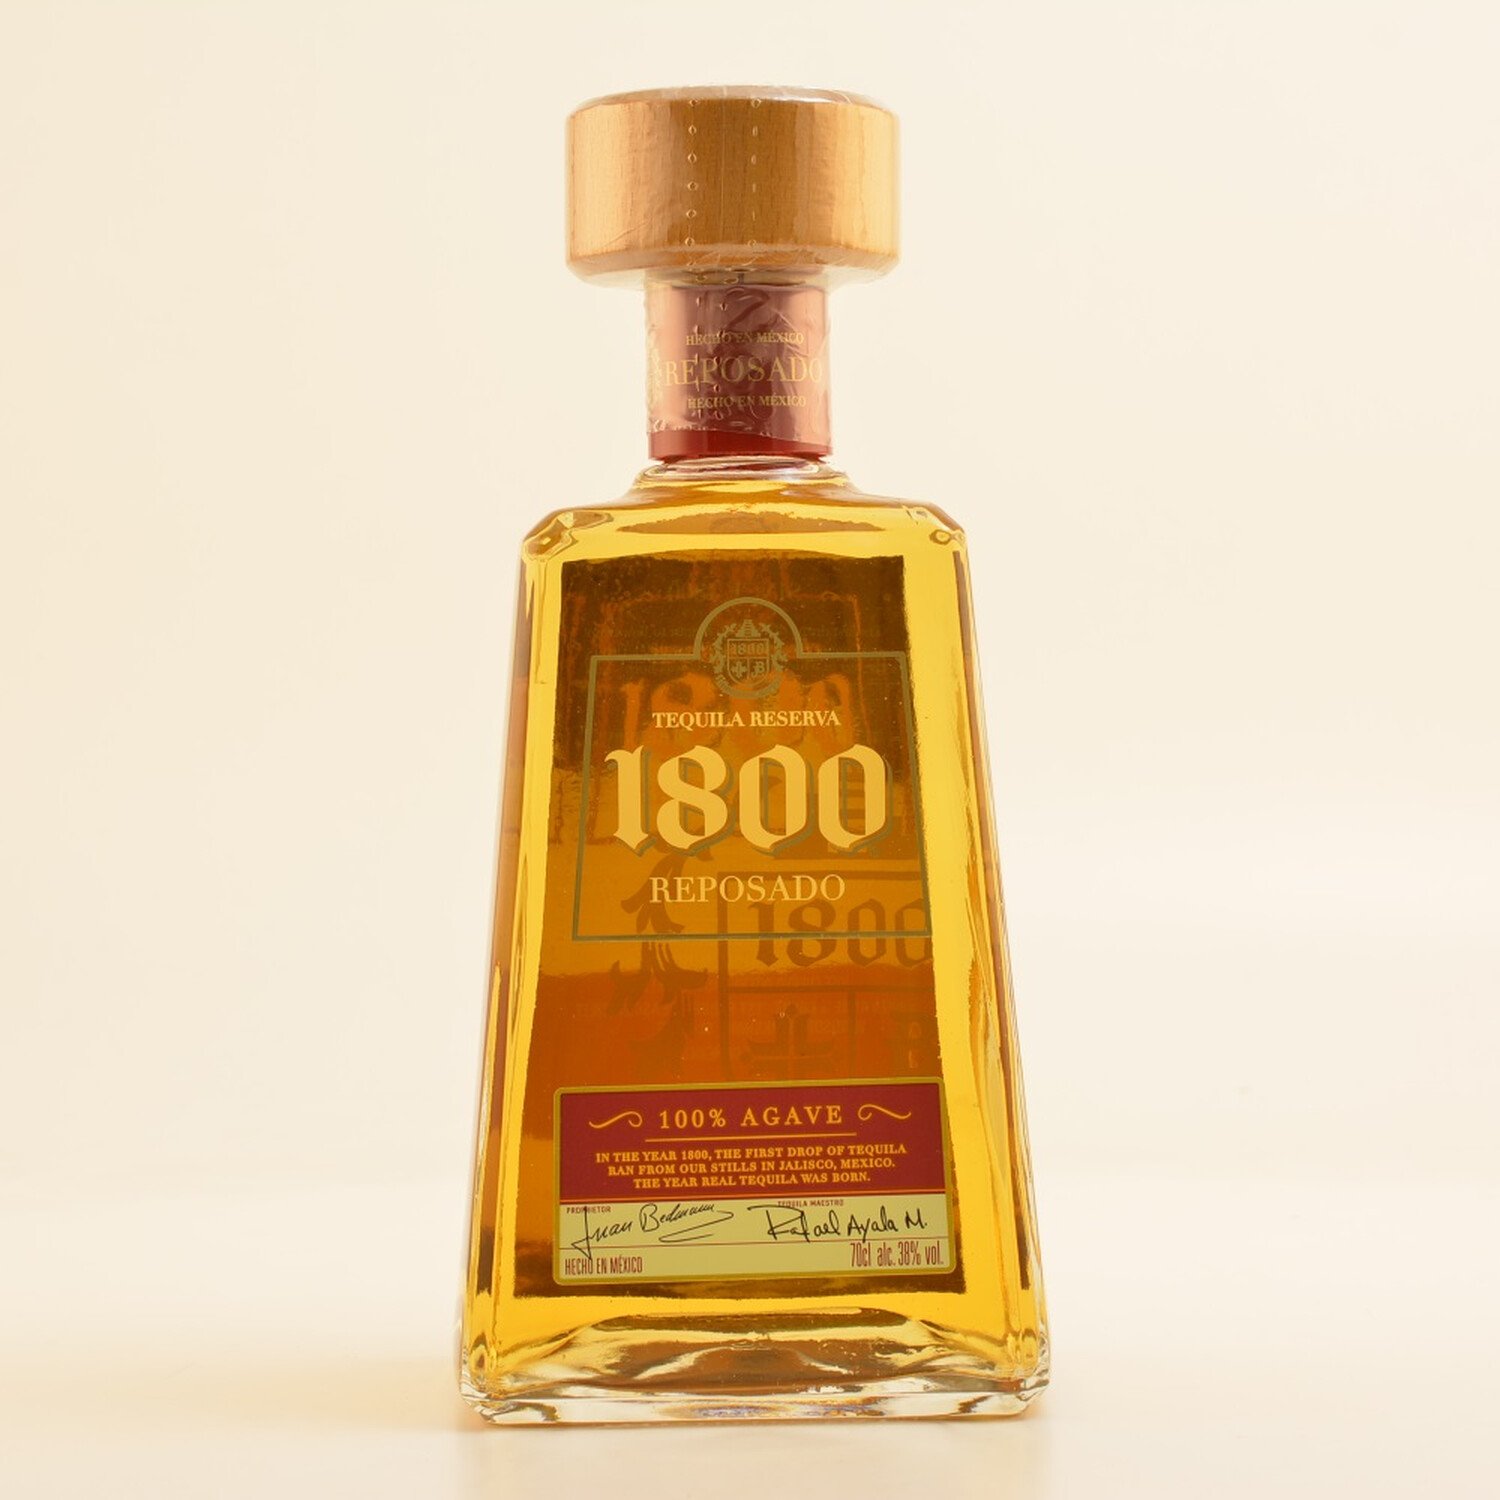 José Cuervo 1800 Tequila Reposado 100% Agave 38% 0,7l, 25,50